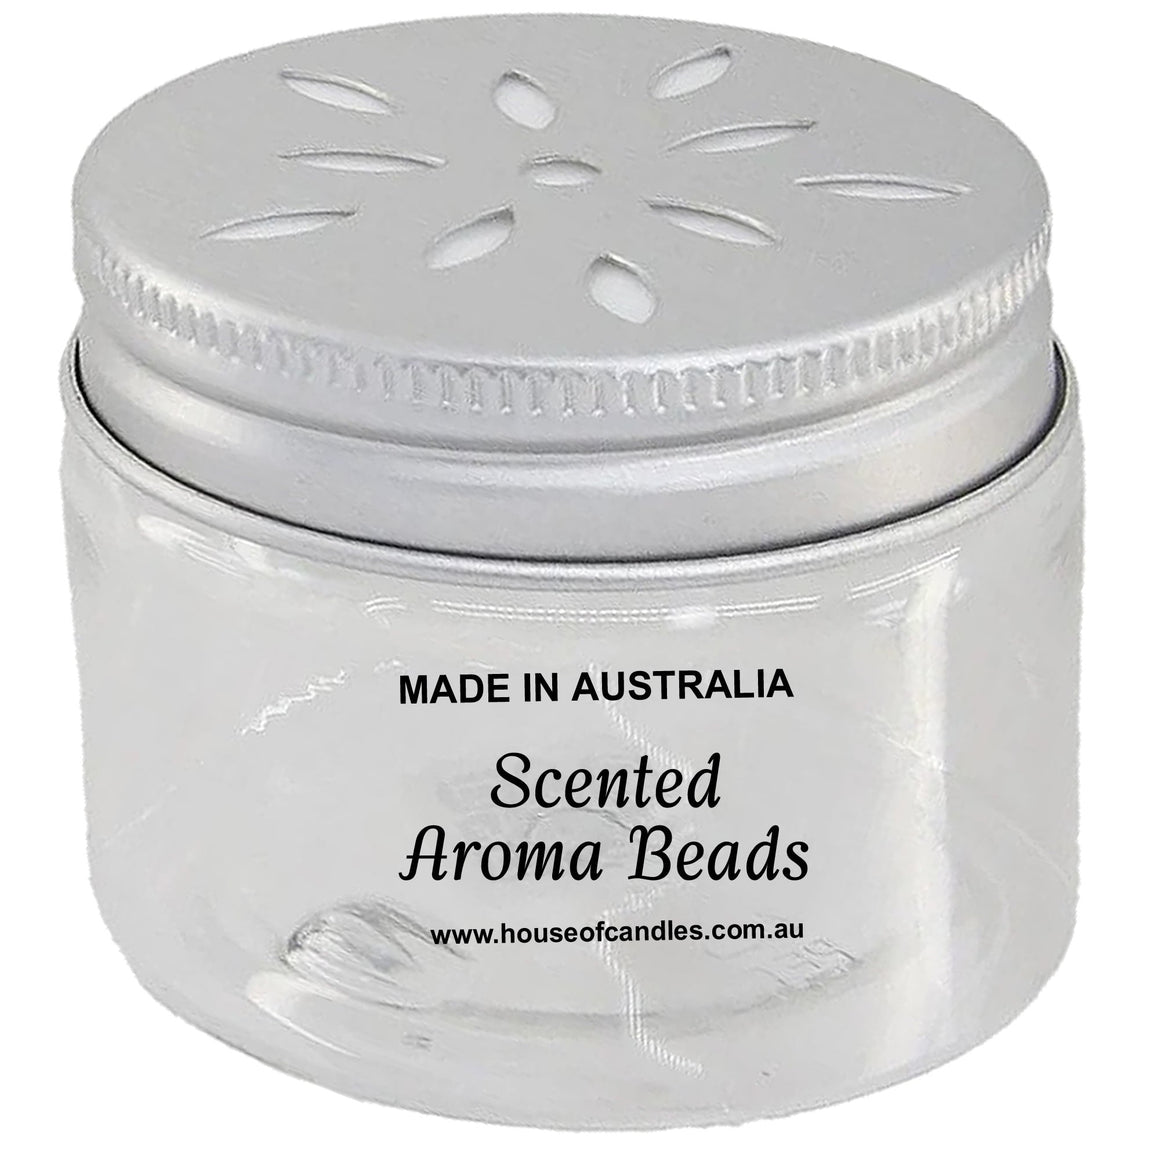 Sandalwood Vanilla Musk Scented Aroma Beads Room/Car Air Freshener